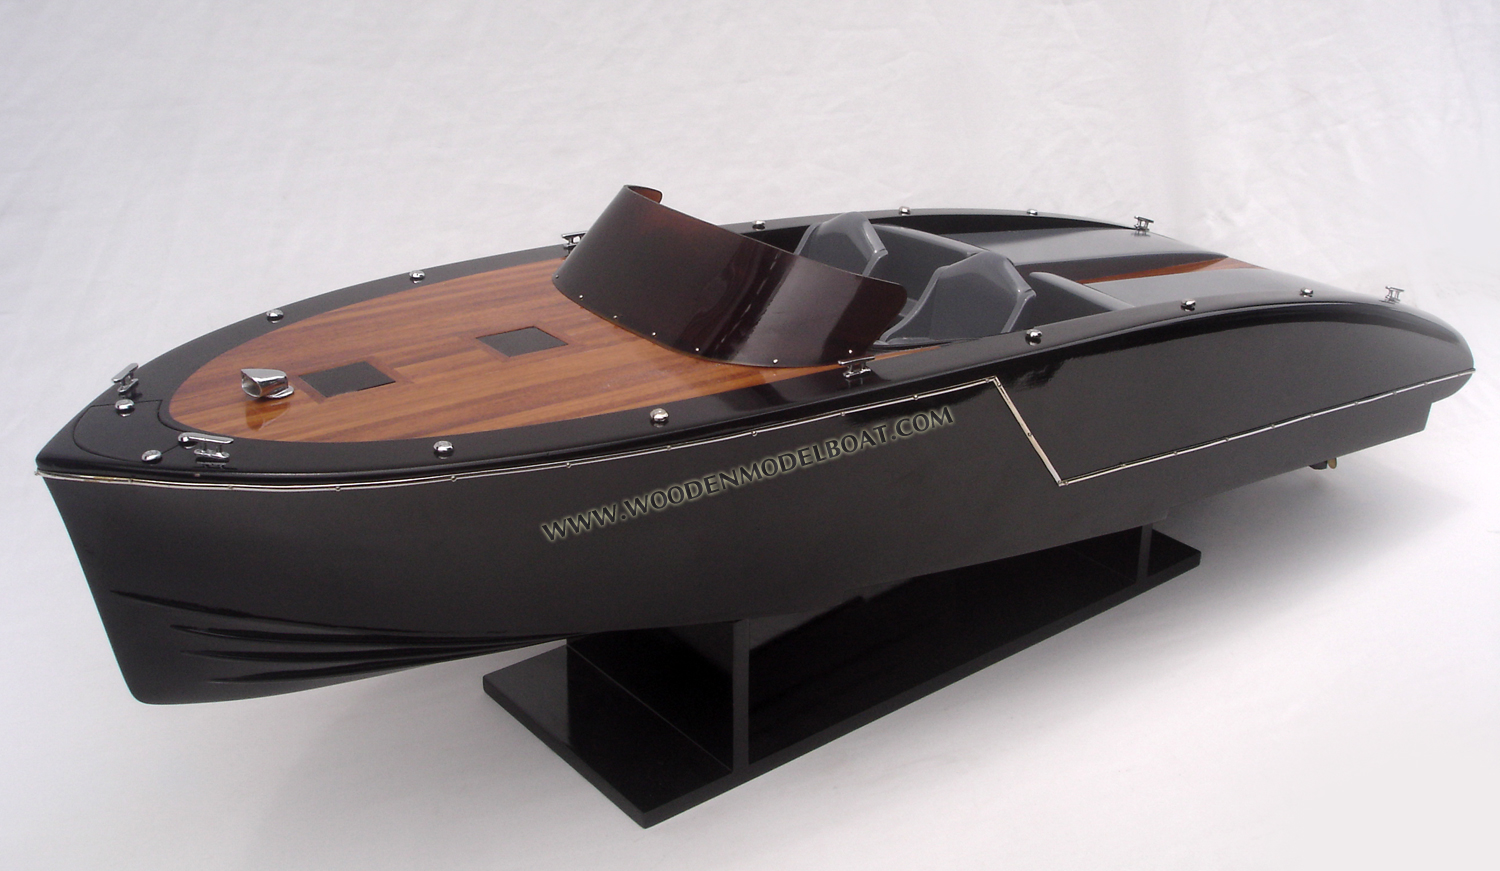 Handmade Model Yacht Sunseeker 68 ready for display